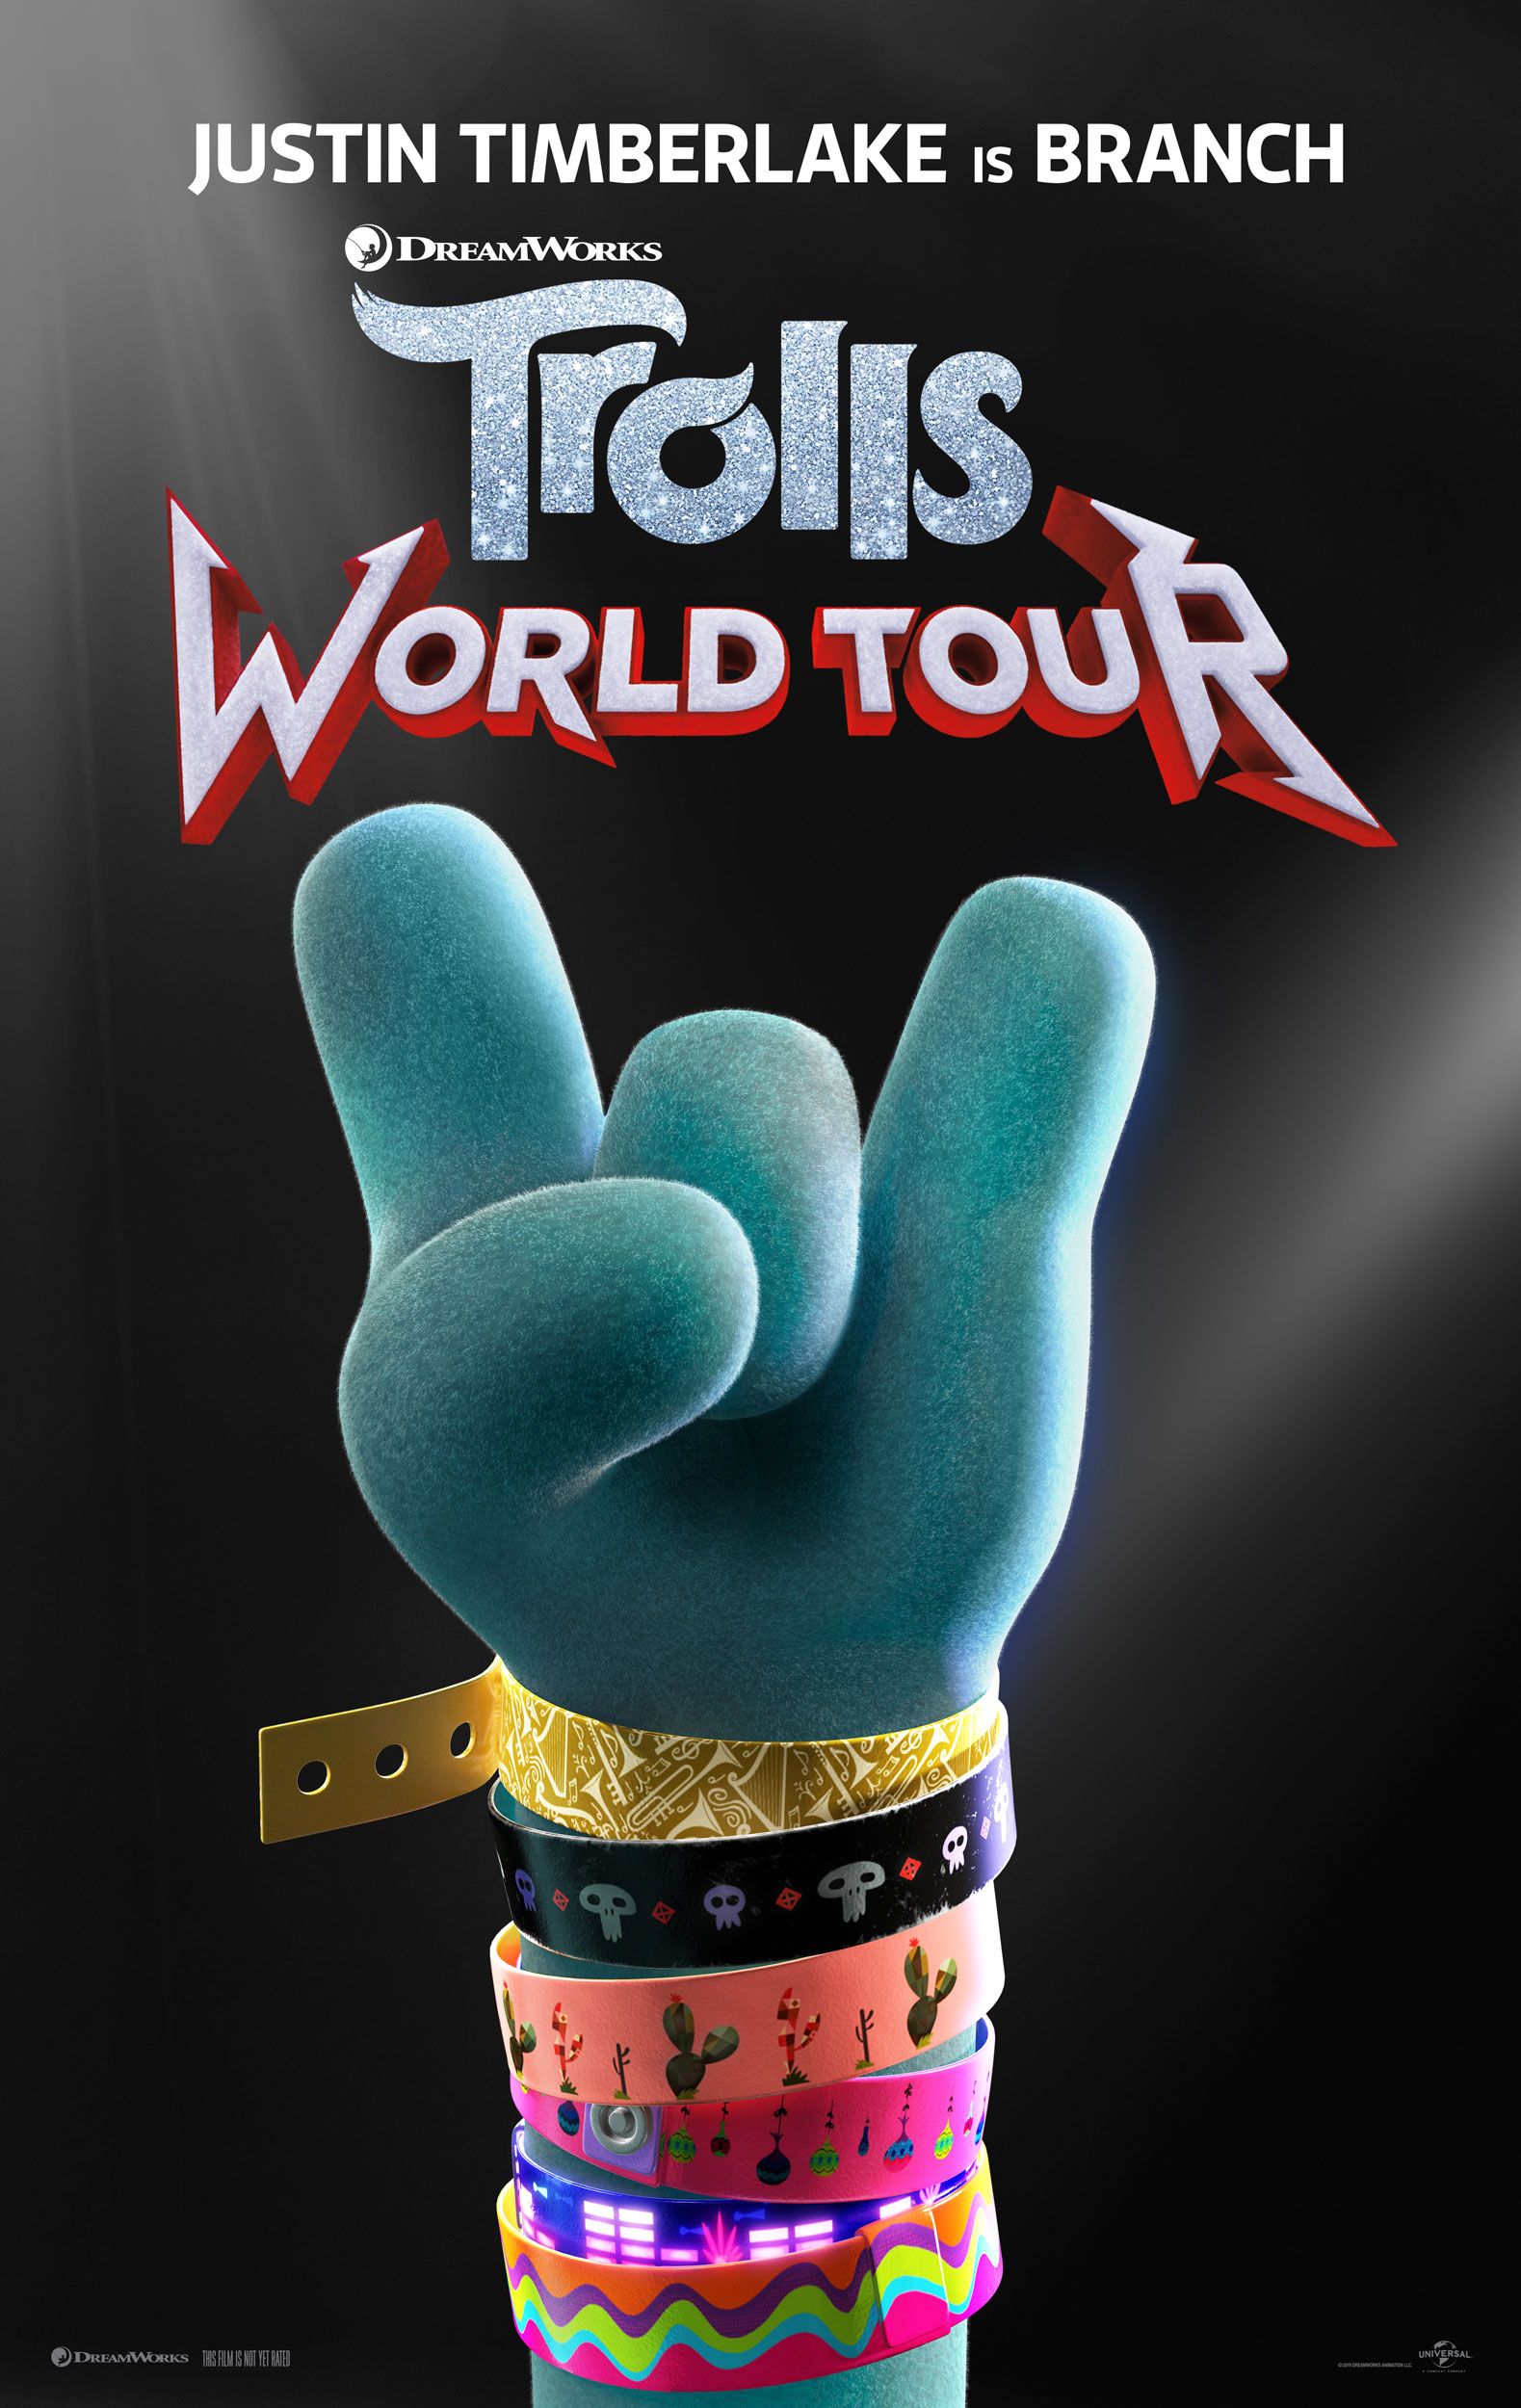 PRINT GUY DIAMOND & TINY - TROLLS 2 Details about   TROLLS WORLD TOUR MOVIE POSTER 